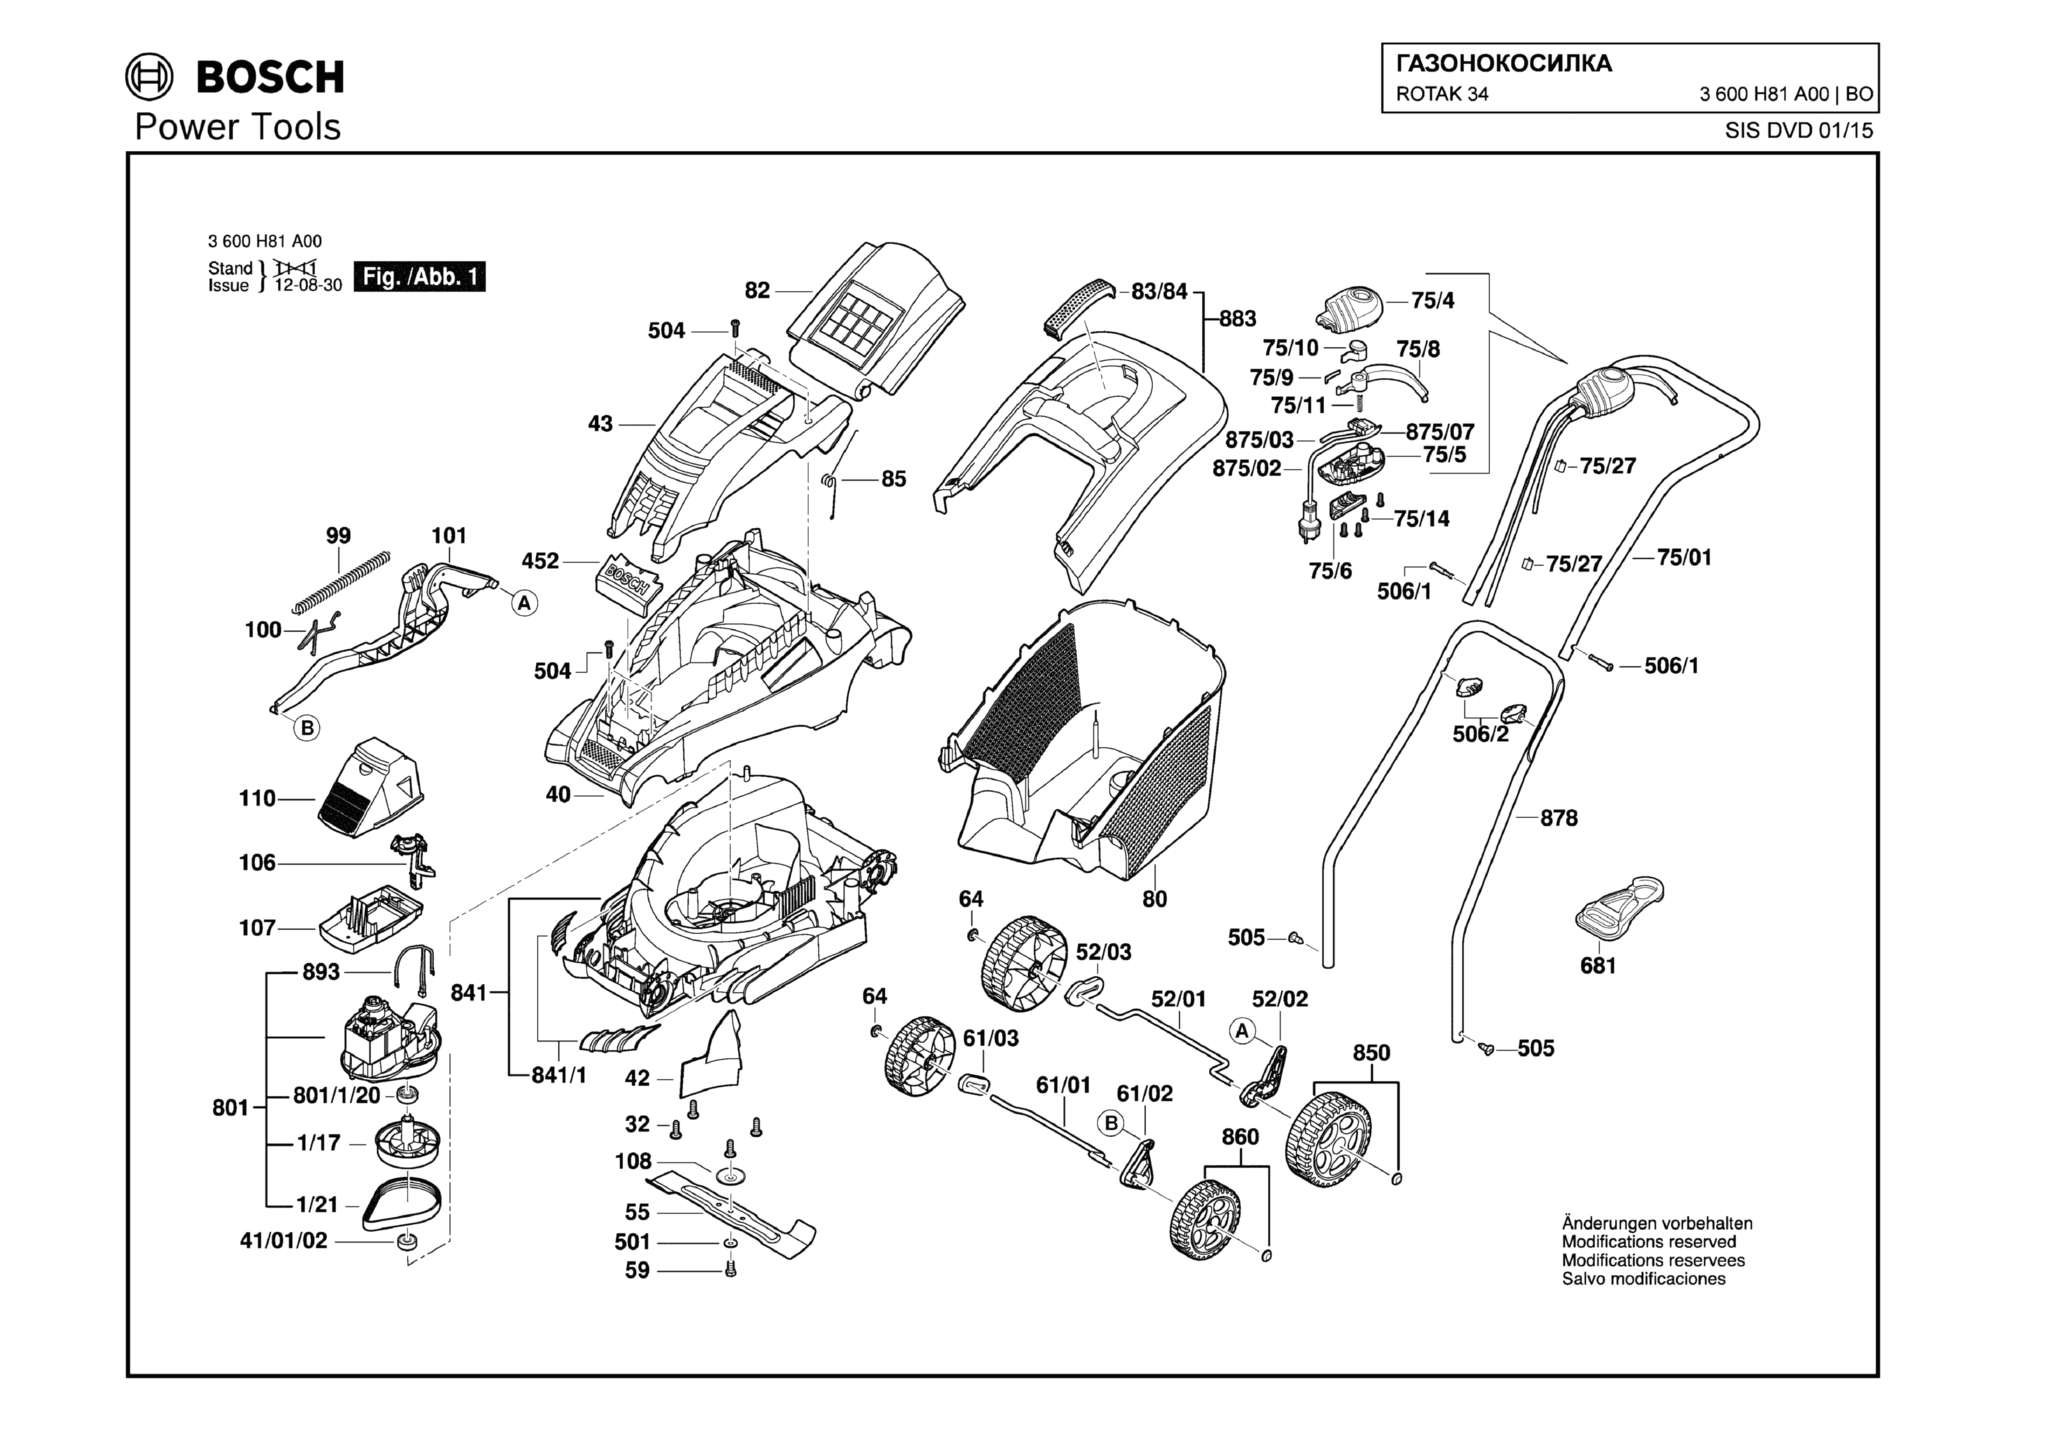 Запчасти, схема и деталировка Bosch ROTAK 34 (ТИП 3600H81A00)